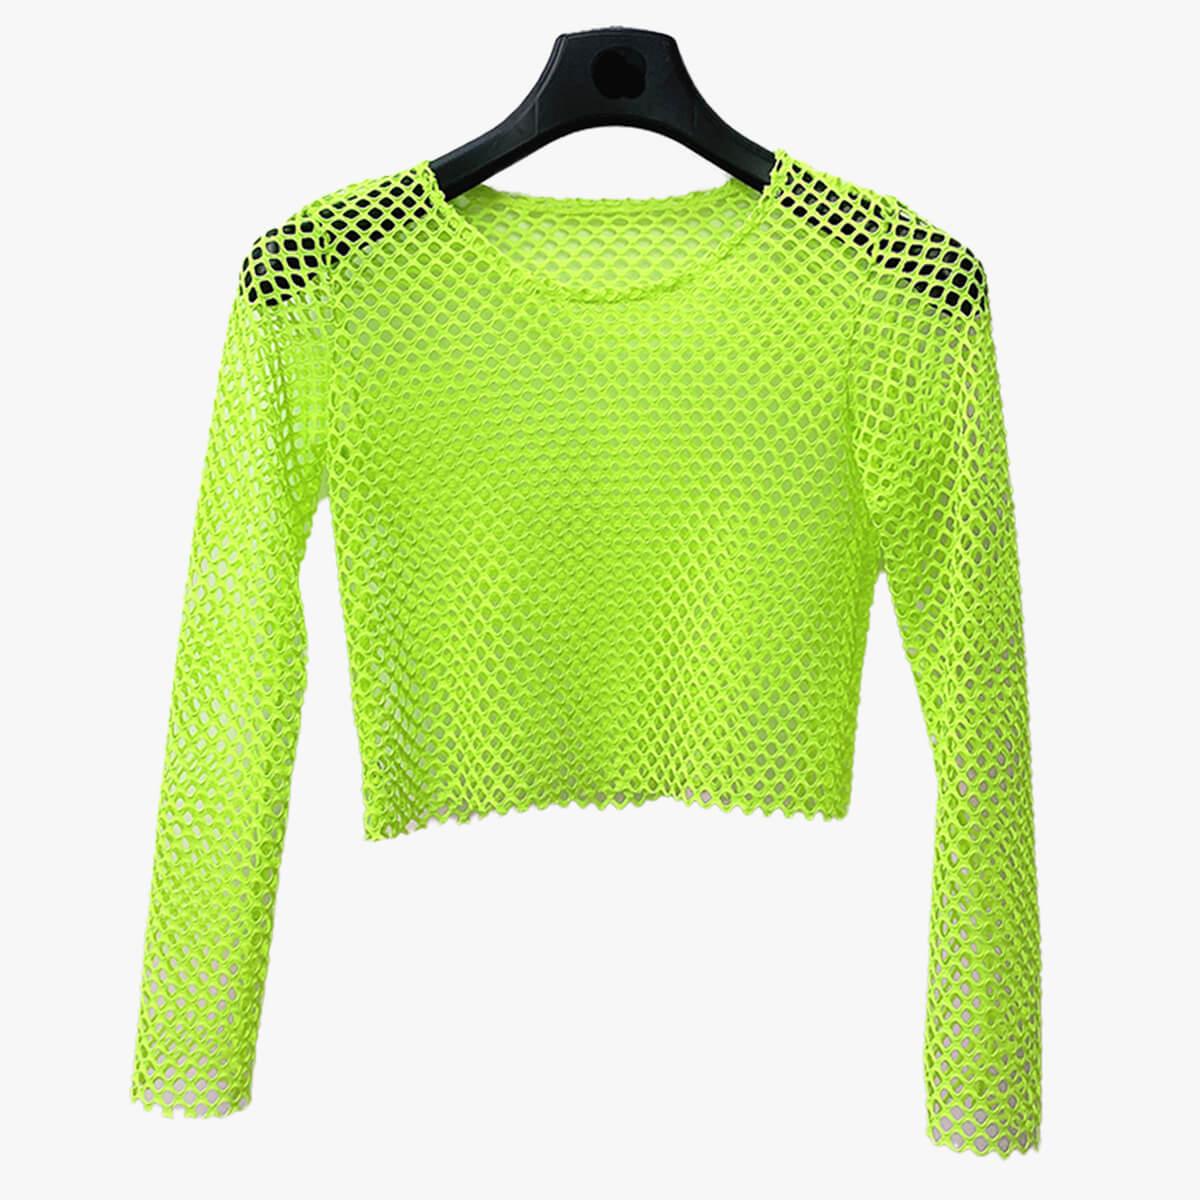  Fishnet Top For Women Long Sleeve Fishnet Shirt Fishnet Crop  Top Custom Green Medium